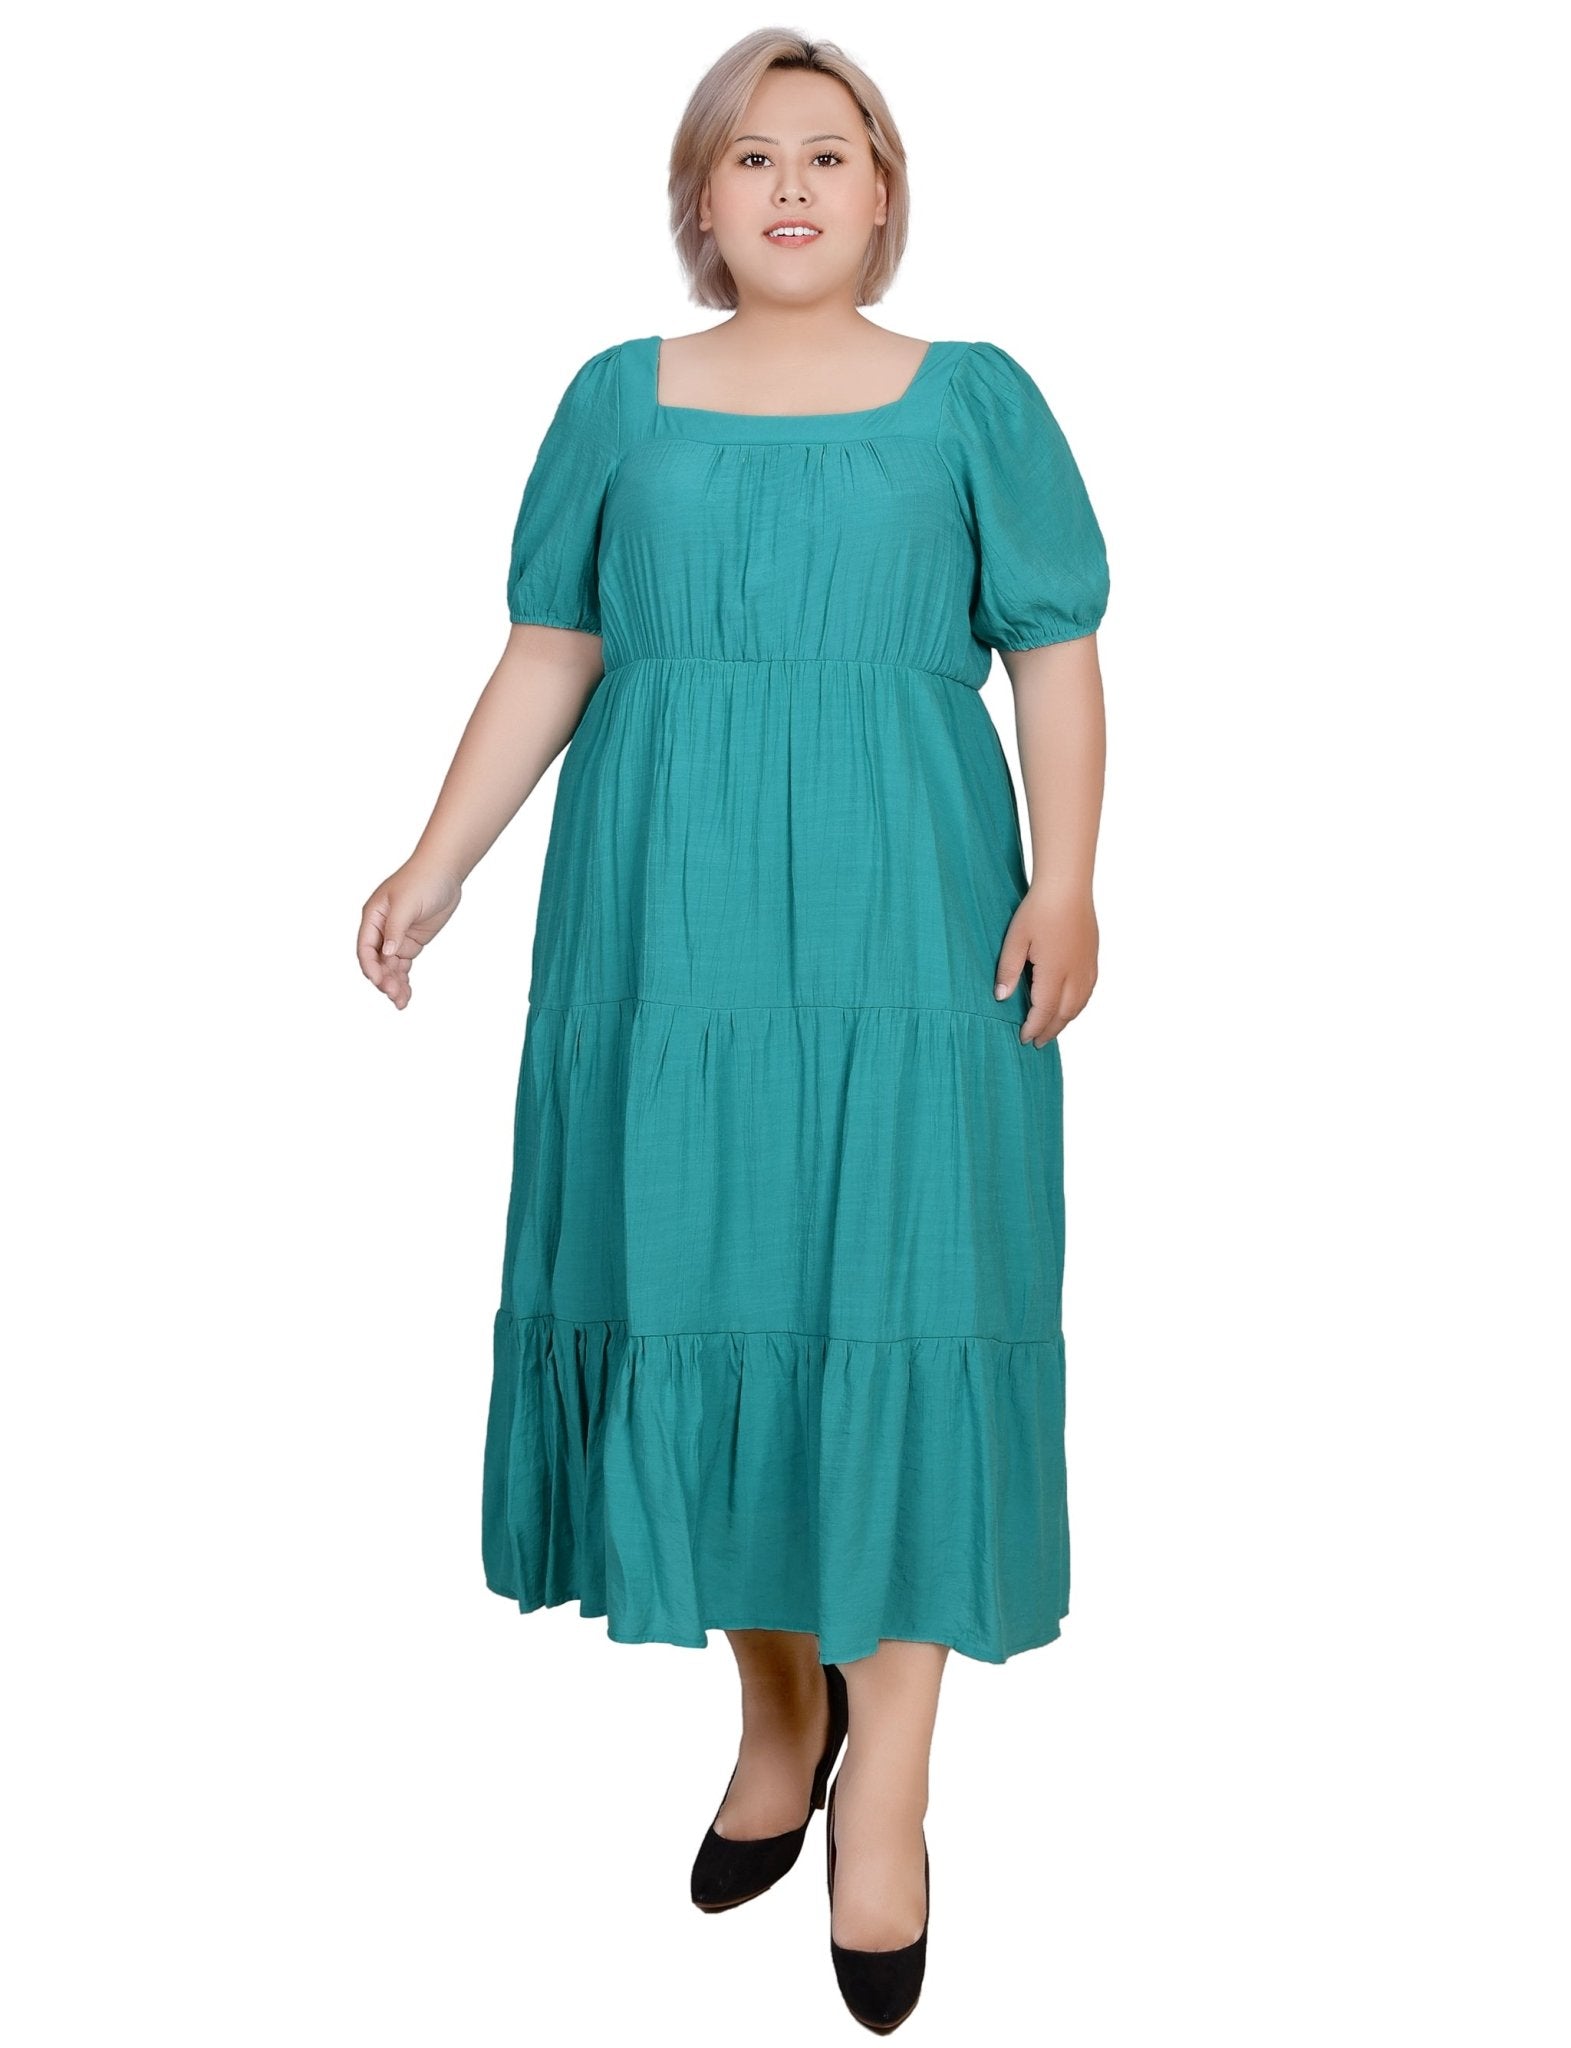 Plus size Dresses - Dressbarn